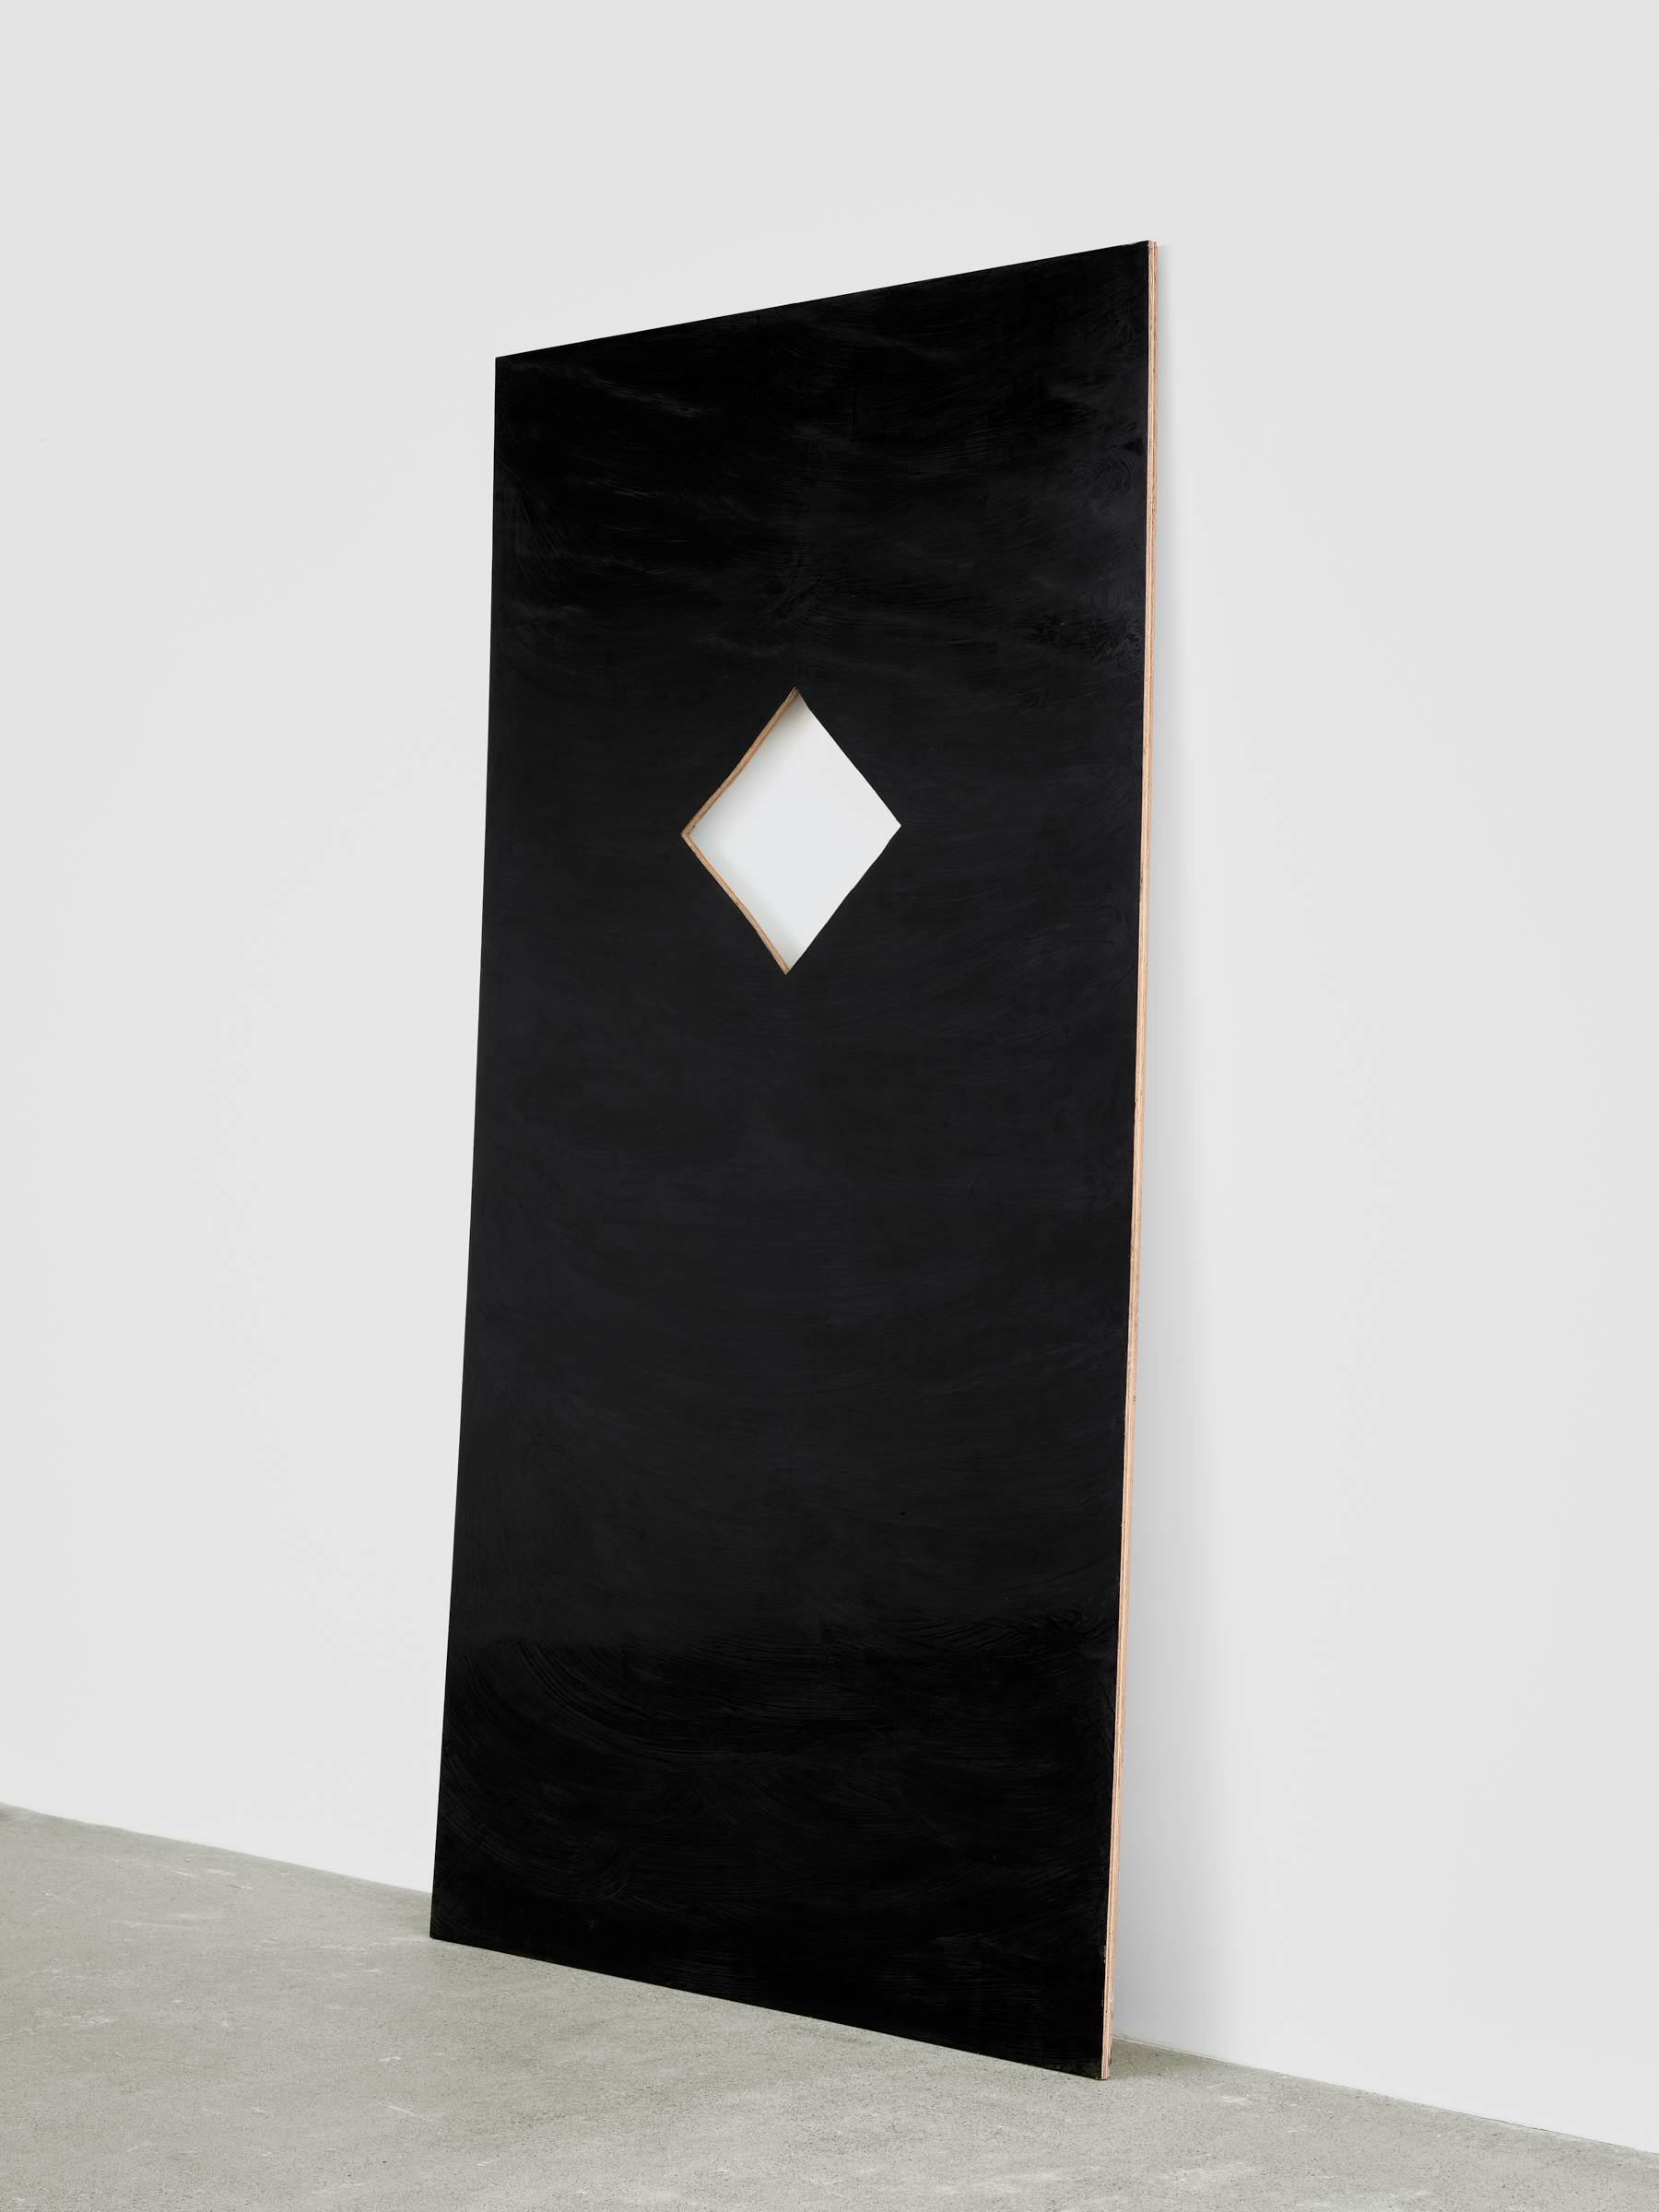 Alex Kwartler, Sky / Mirror, 2022, Venetian plaster on plywood, 96 x 48 in.